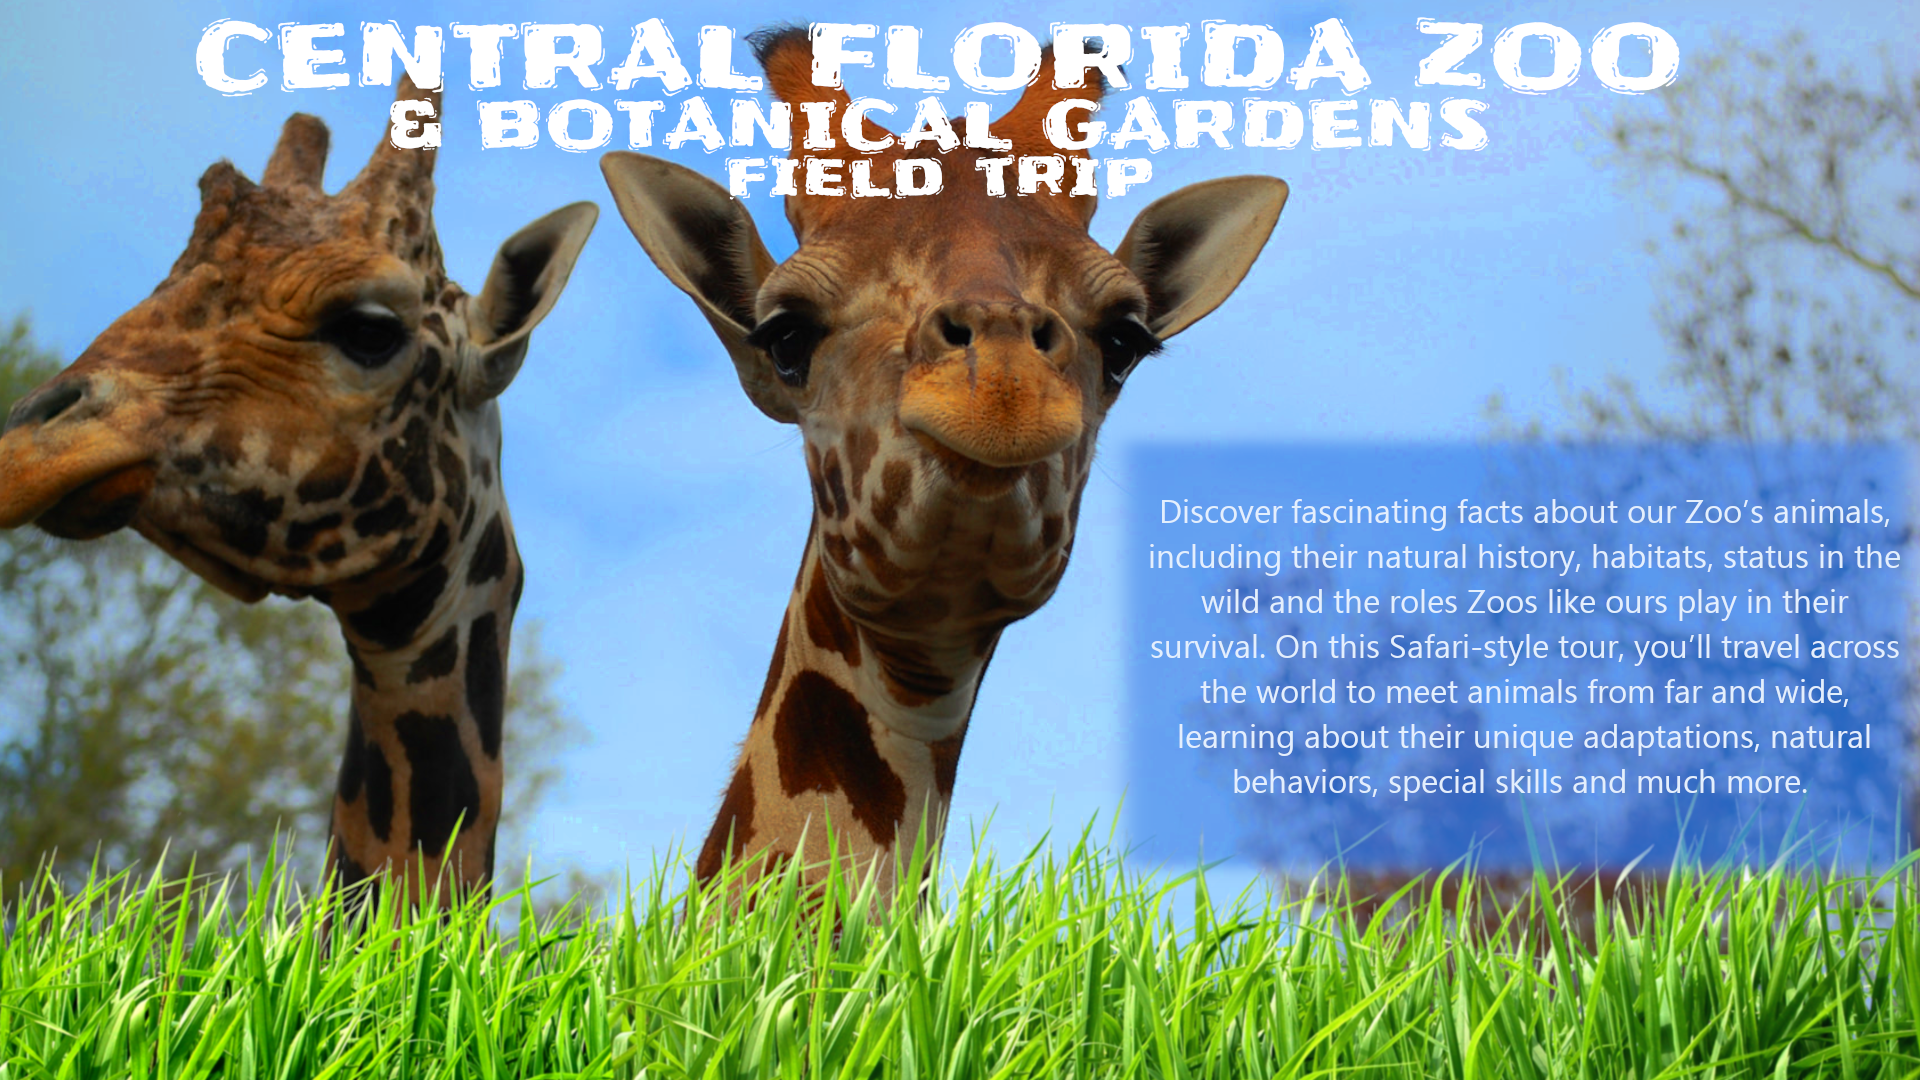 The Central Florida Zoo